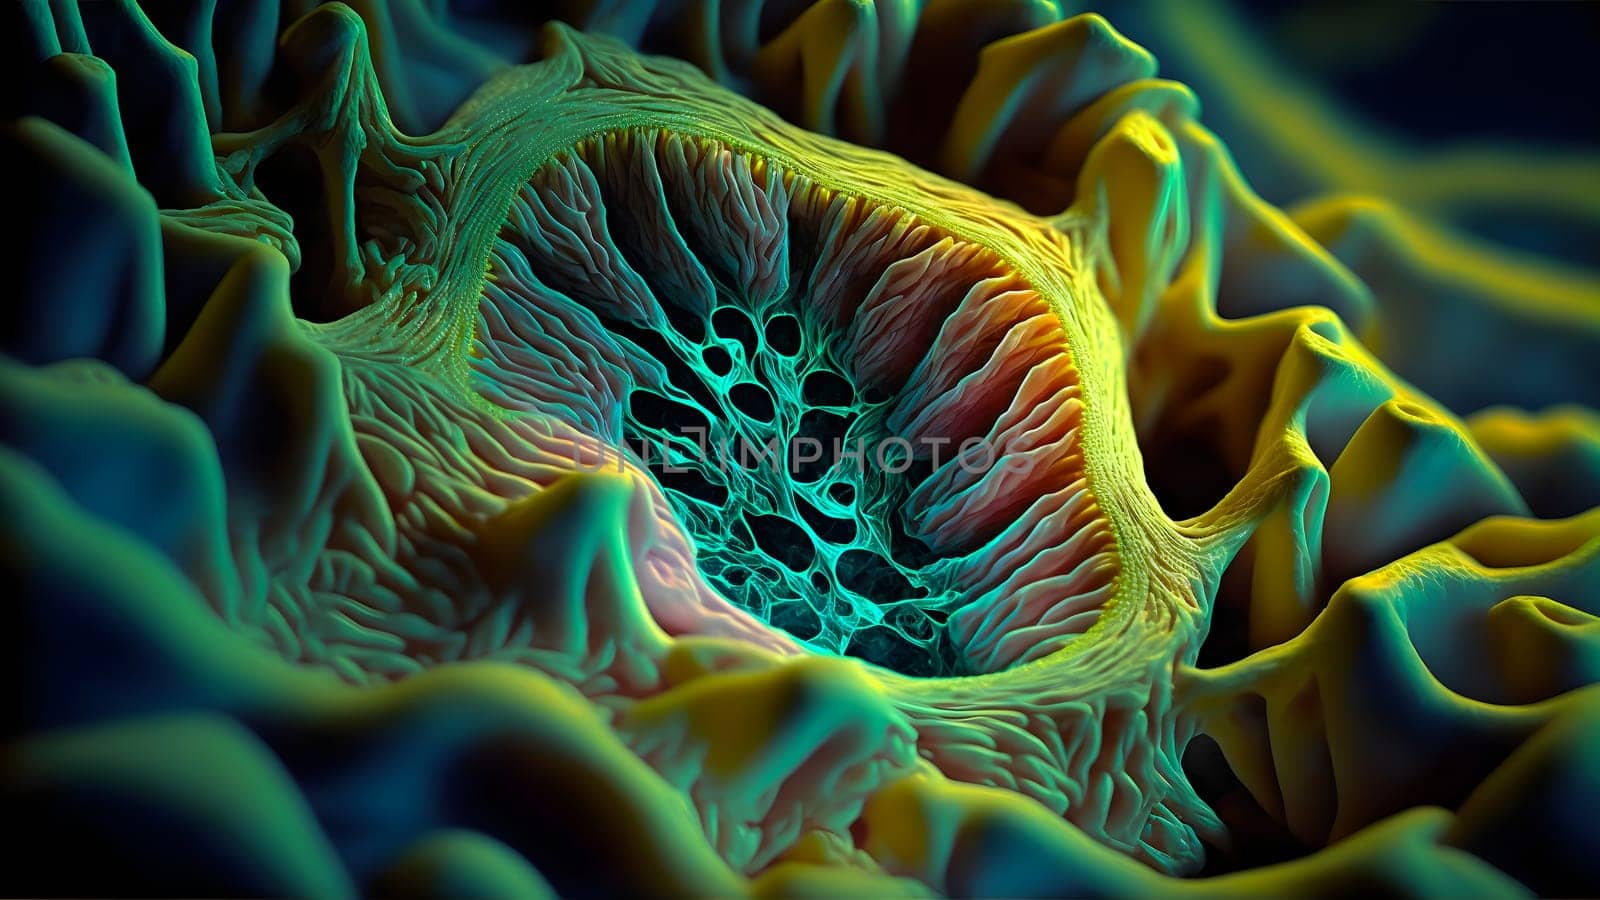 alien microbiological fantastic organism, neural network generated art by z1b